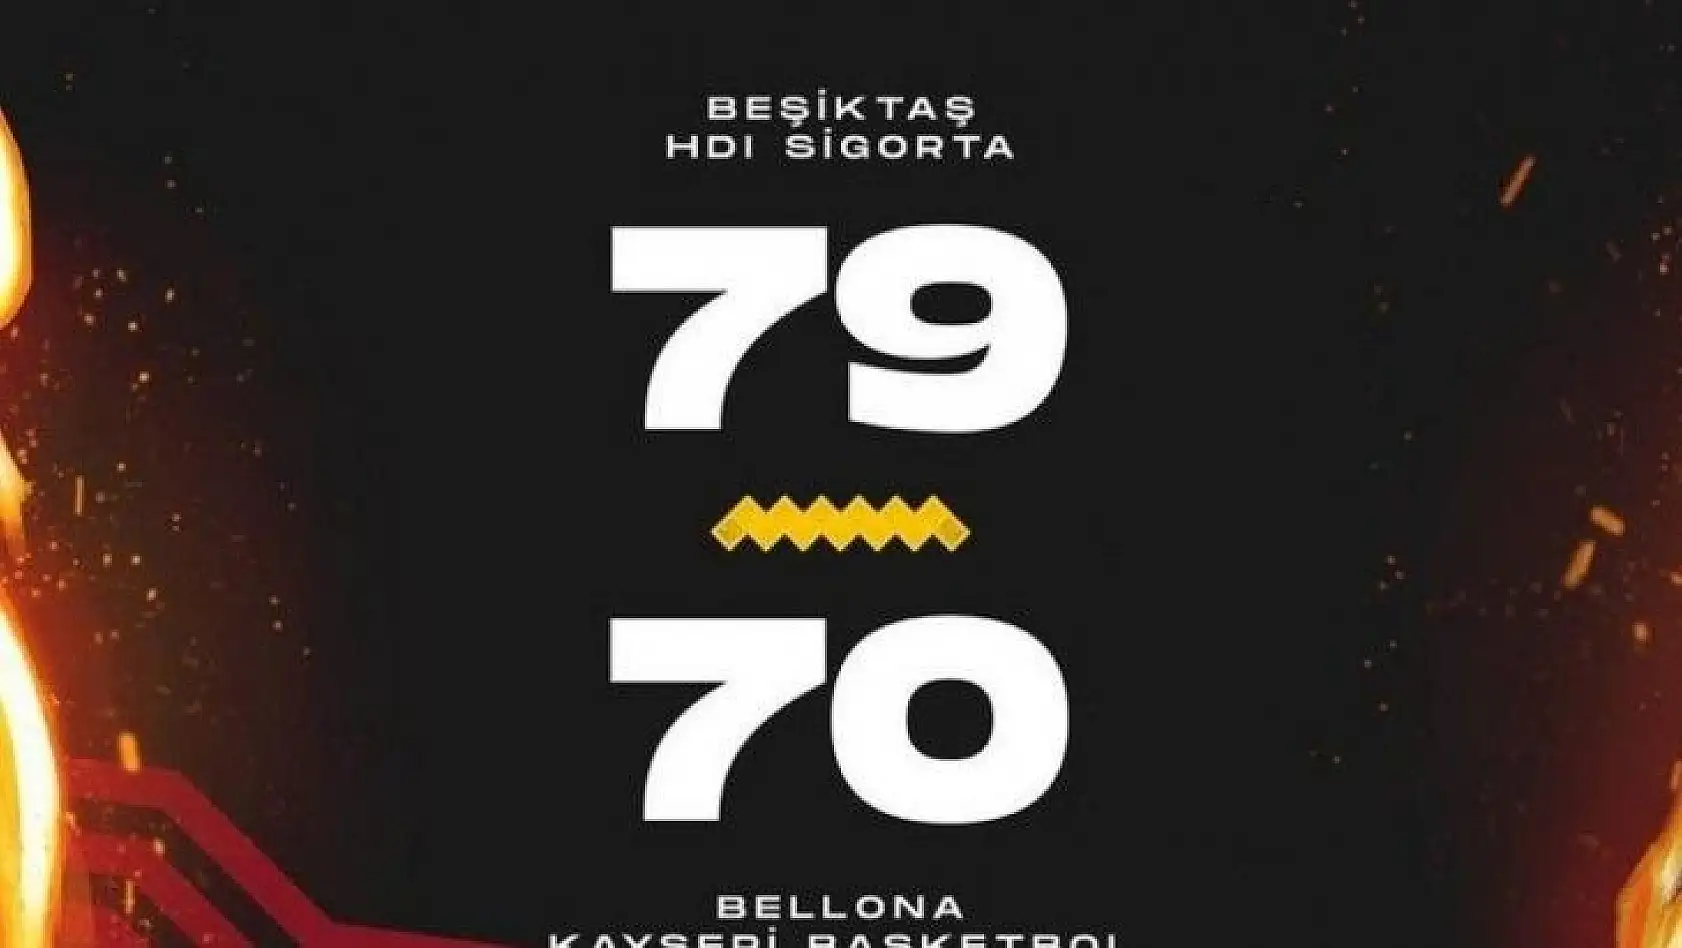 Beşiktaş HDI Sigorta:79 - Bellona Kayseri Basketbol: 70